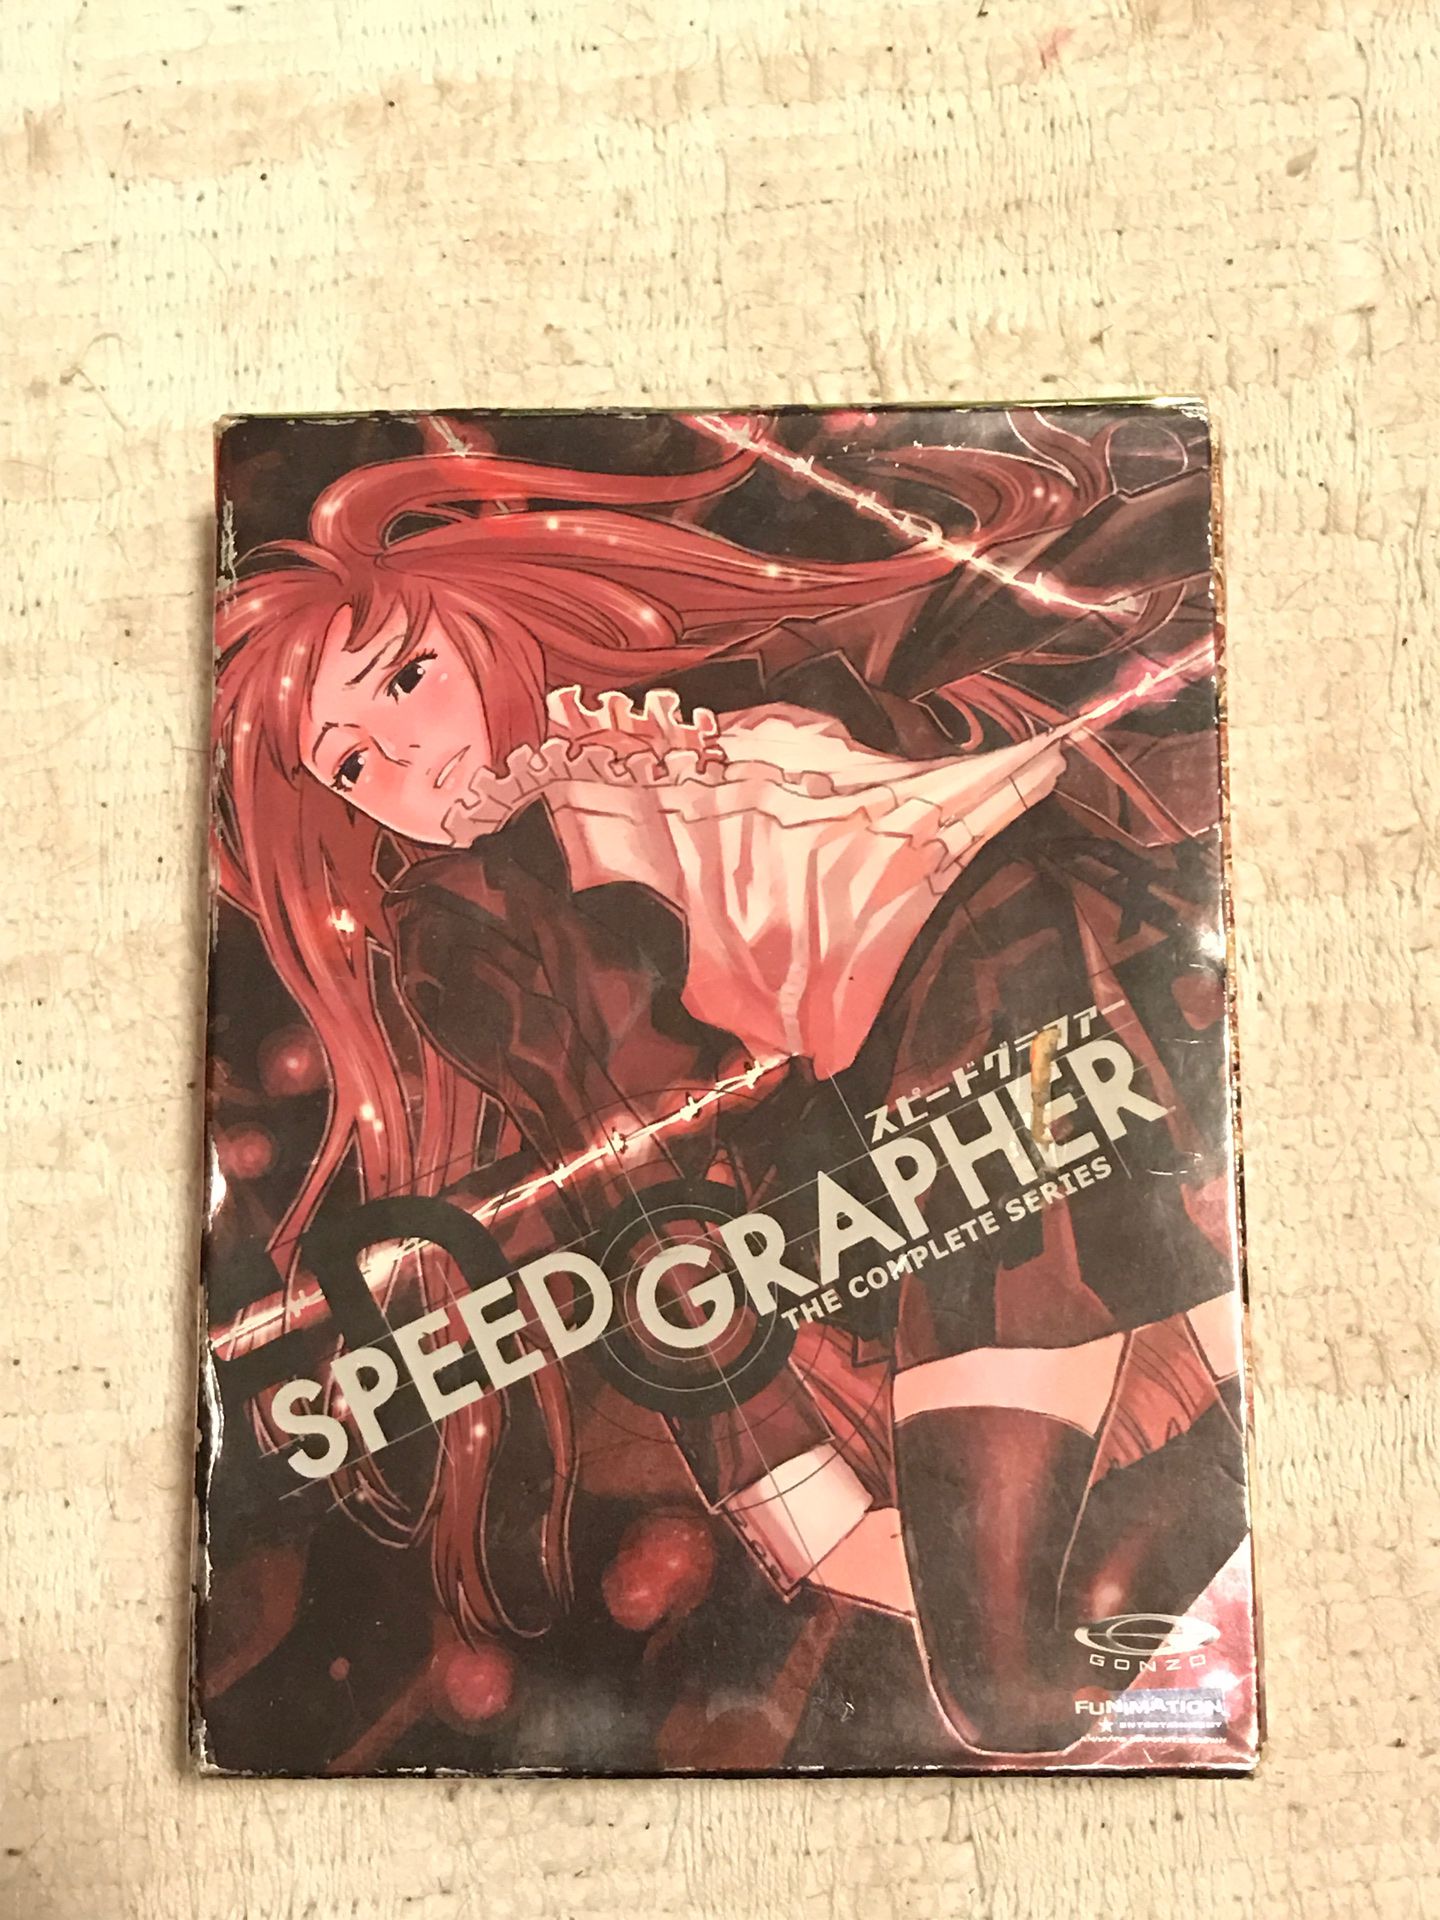 Speedgrapher Anime complete series